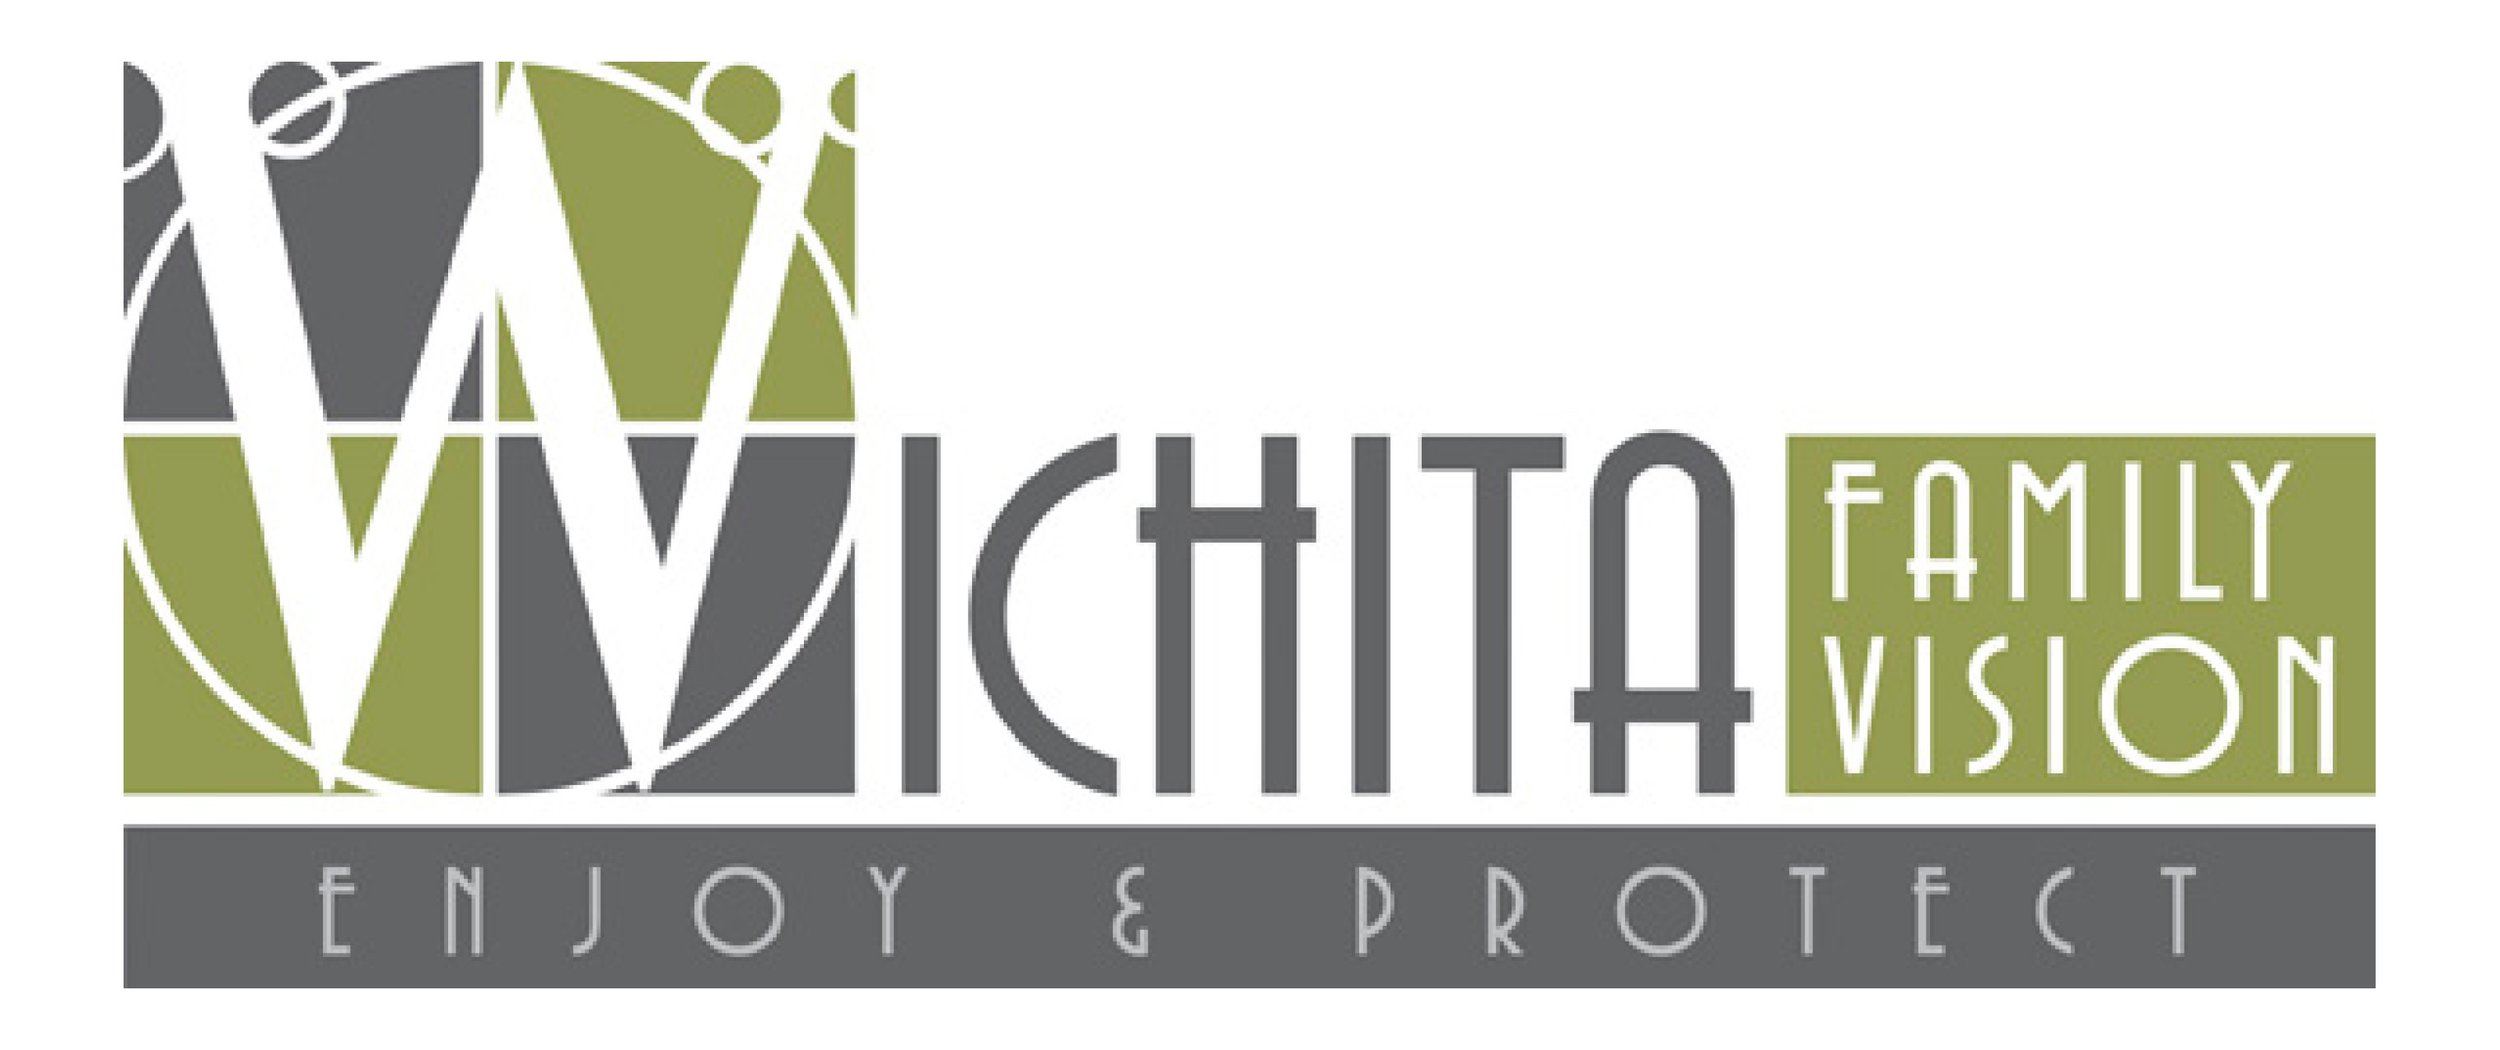 Wichita Family Vision Logo - Web.jpg